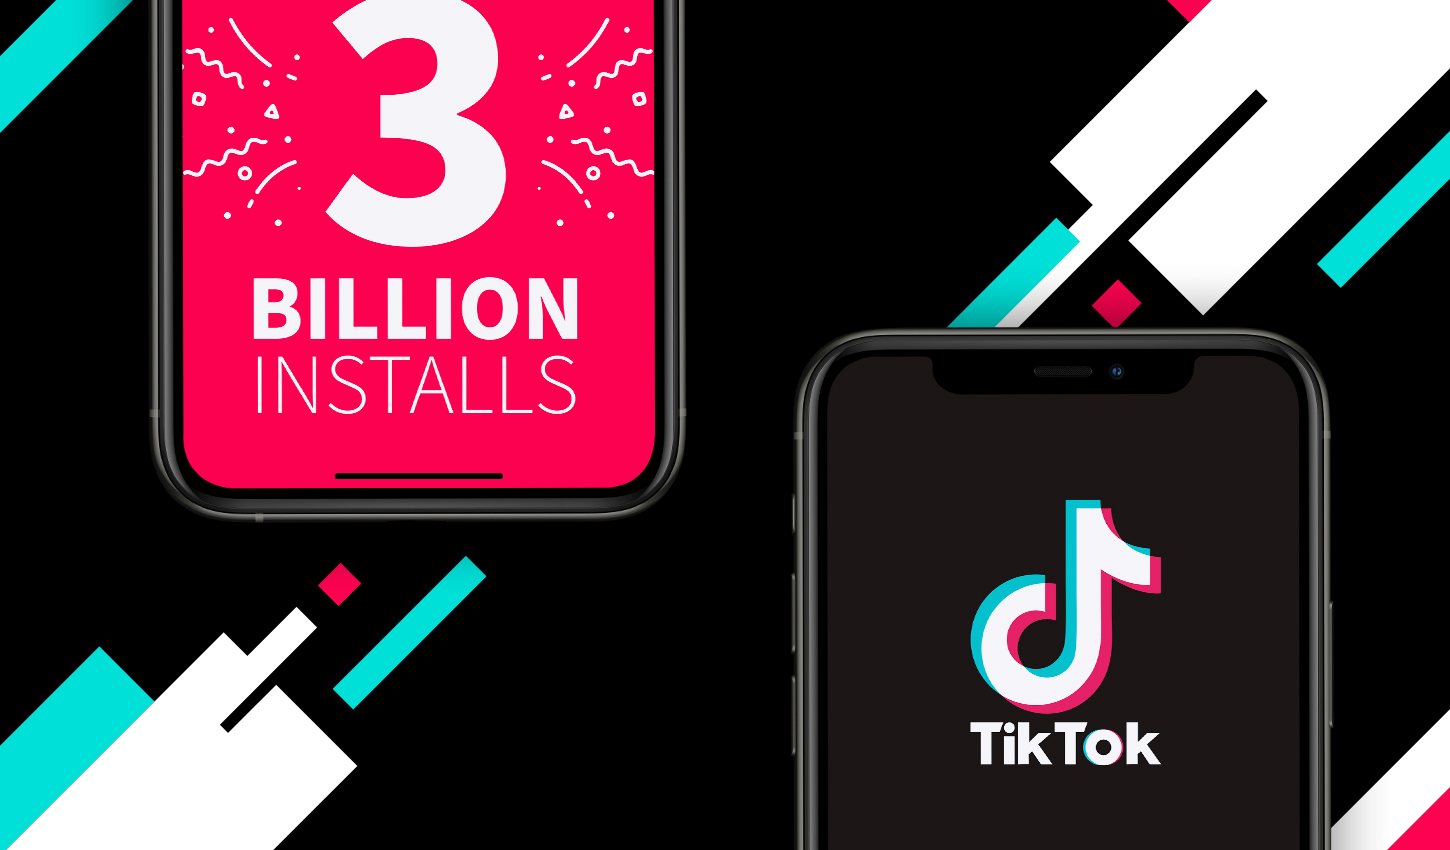 TikTok is the only non-Facebook app to hit 3 billion installs